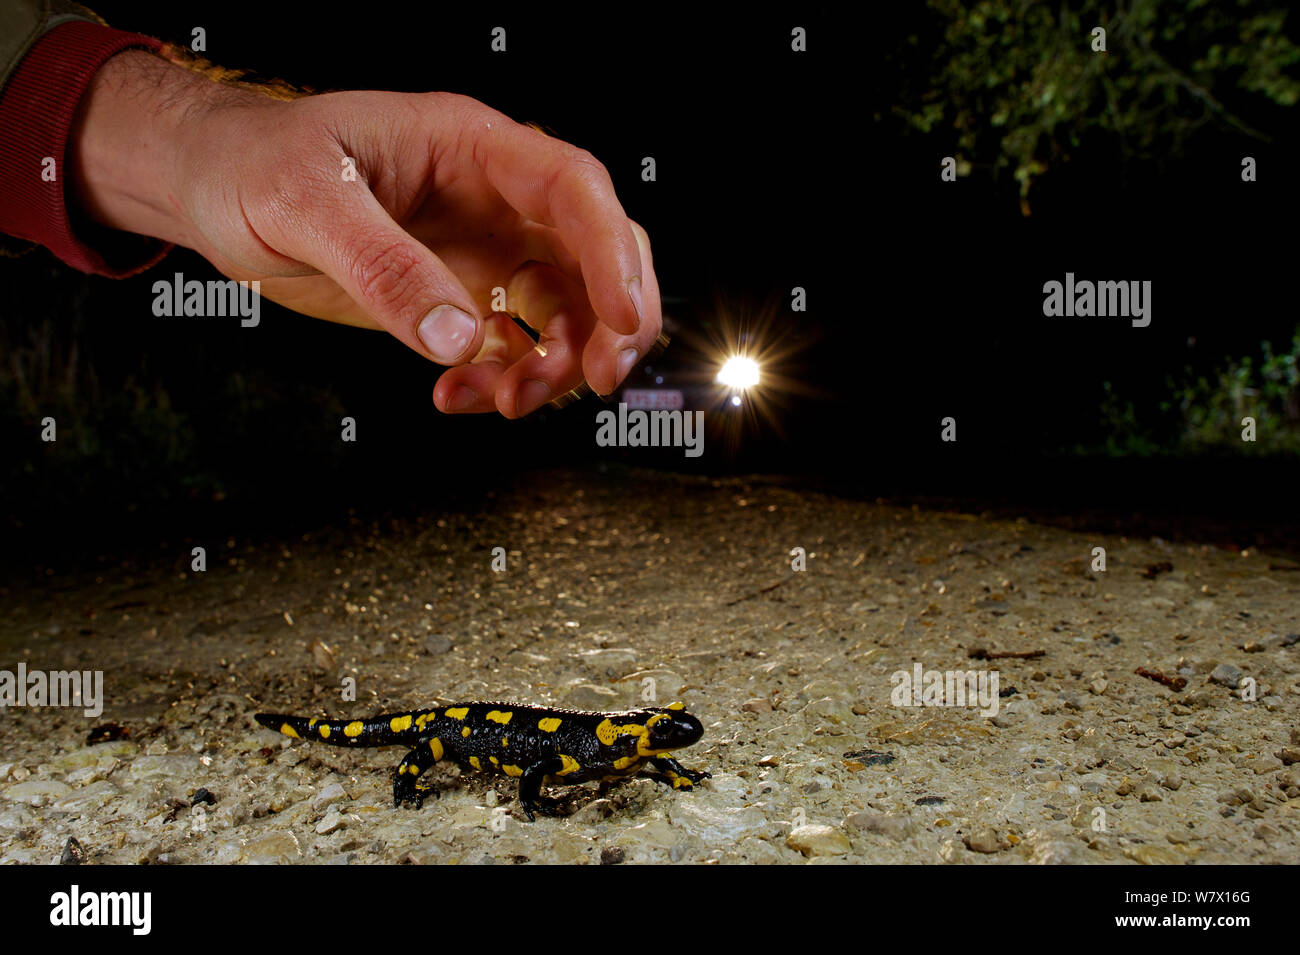 El hombre va a recoger un fuego Salamandra (Salamandra salamandra) que está cruzando la carretera con un coche acercándose, Francia. De noviembre. Foto de stock